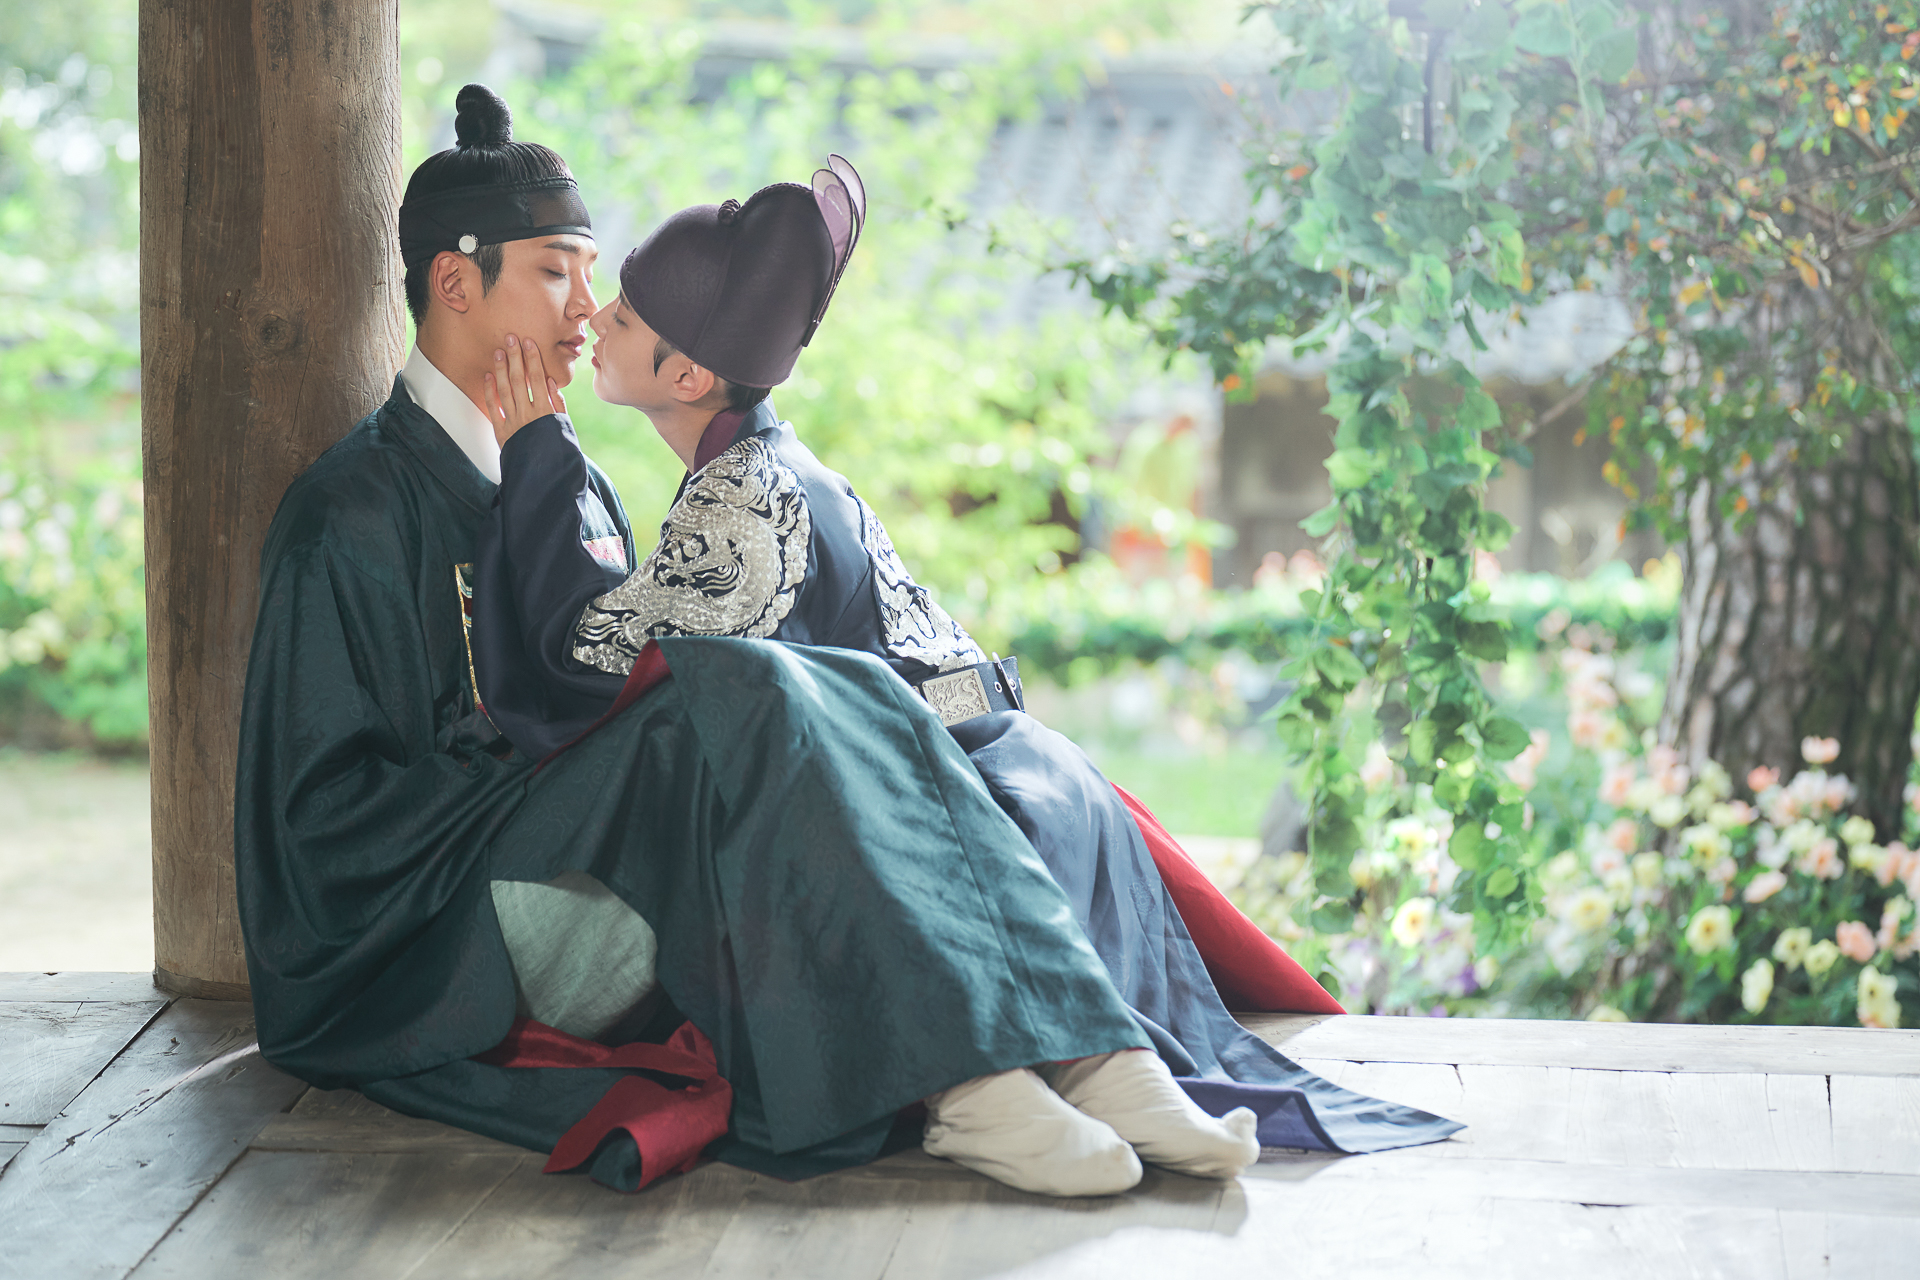 [Feb] K-drama popularity opens up door for romance series Photo